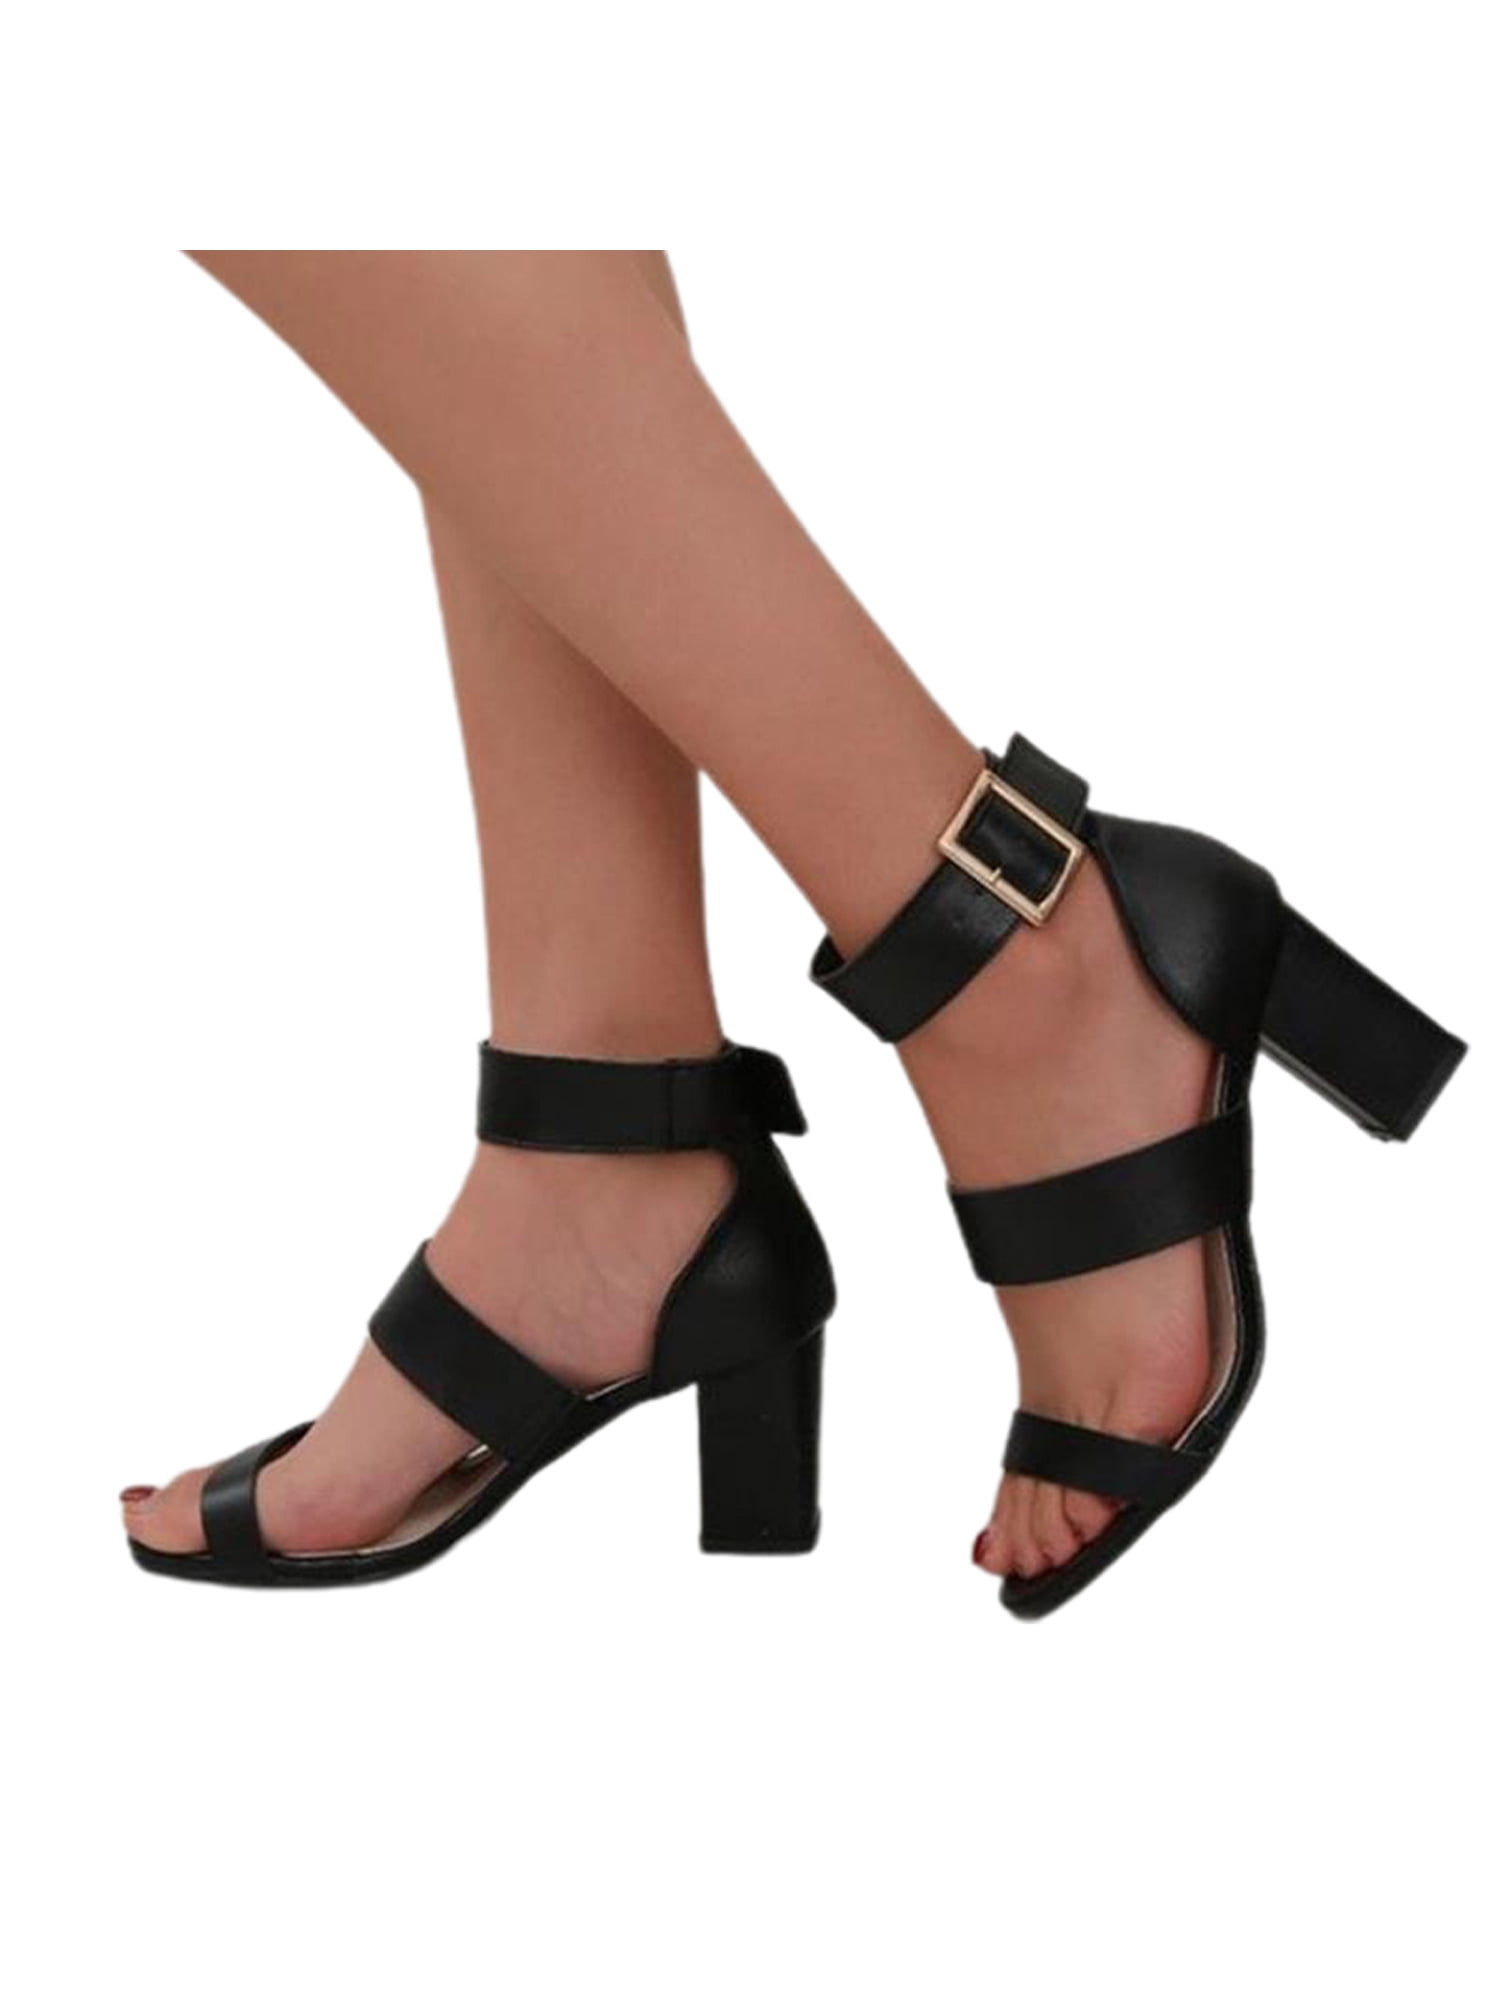 Open Toe Womens Buckle Sandals Slingbacks Summer Block Heels Ankle Strap Shoes 